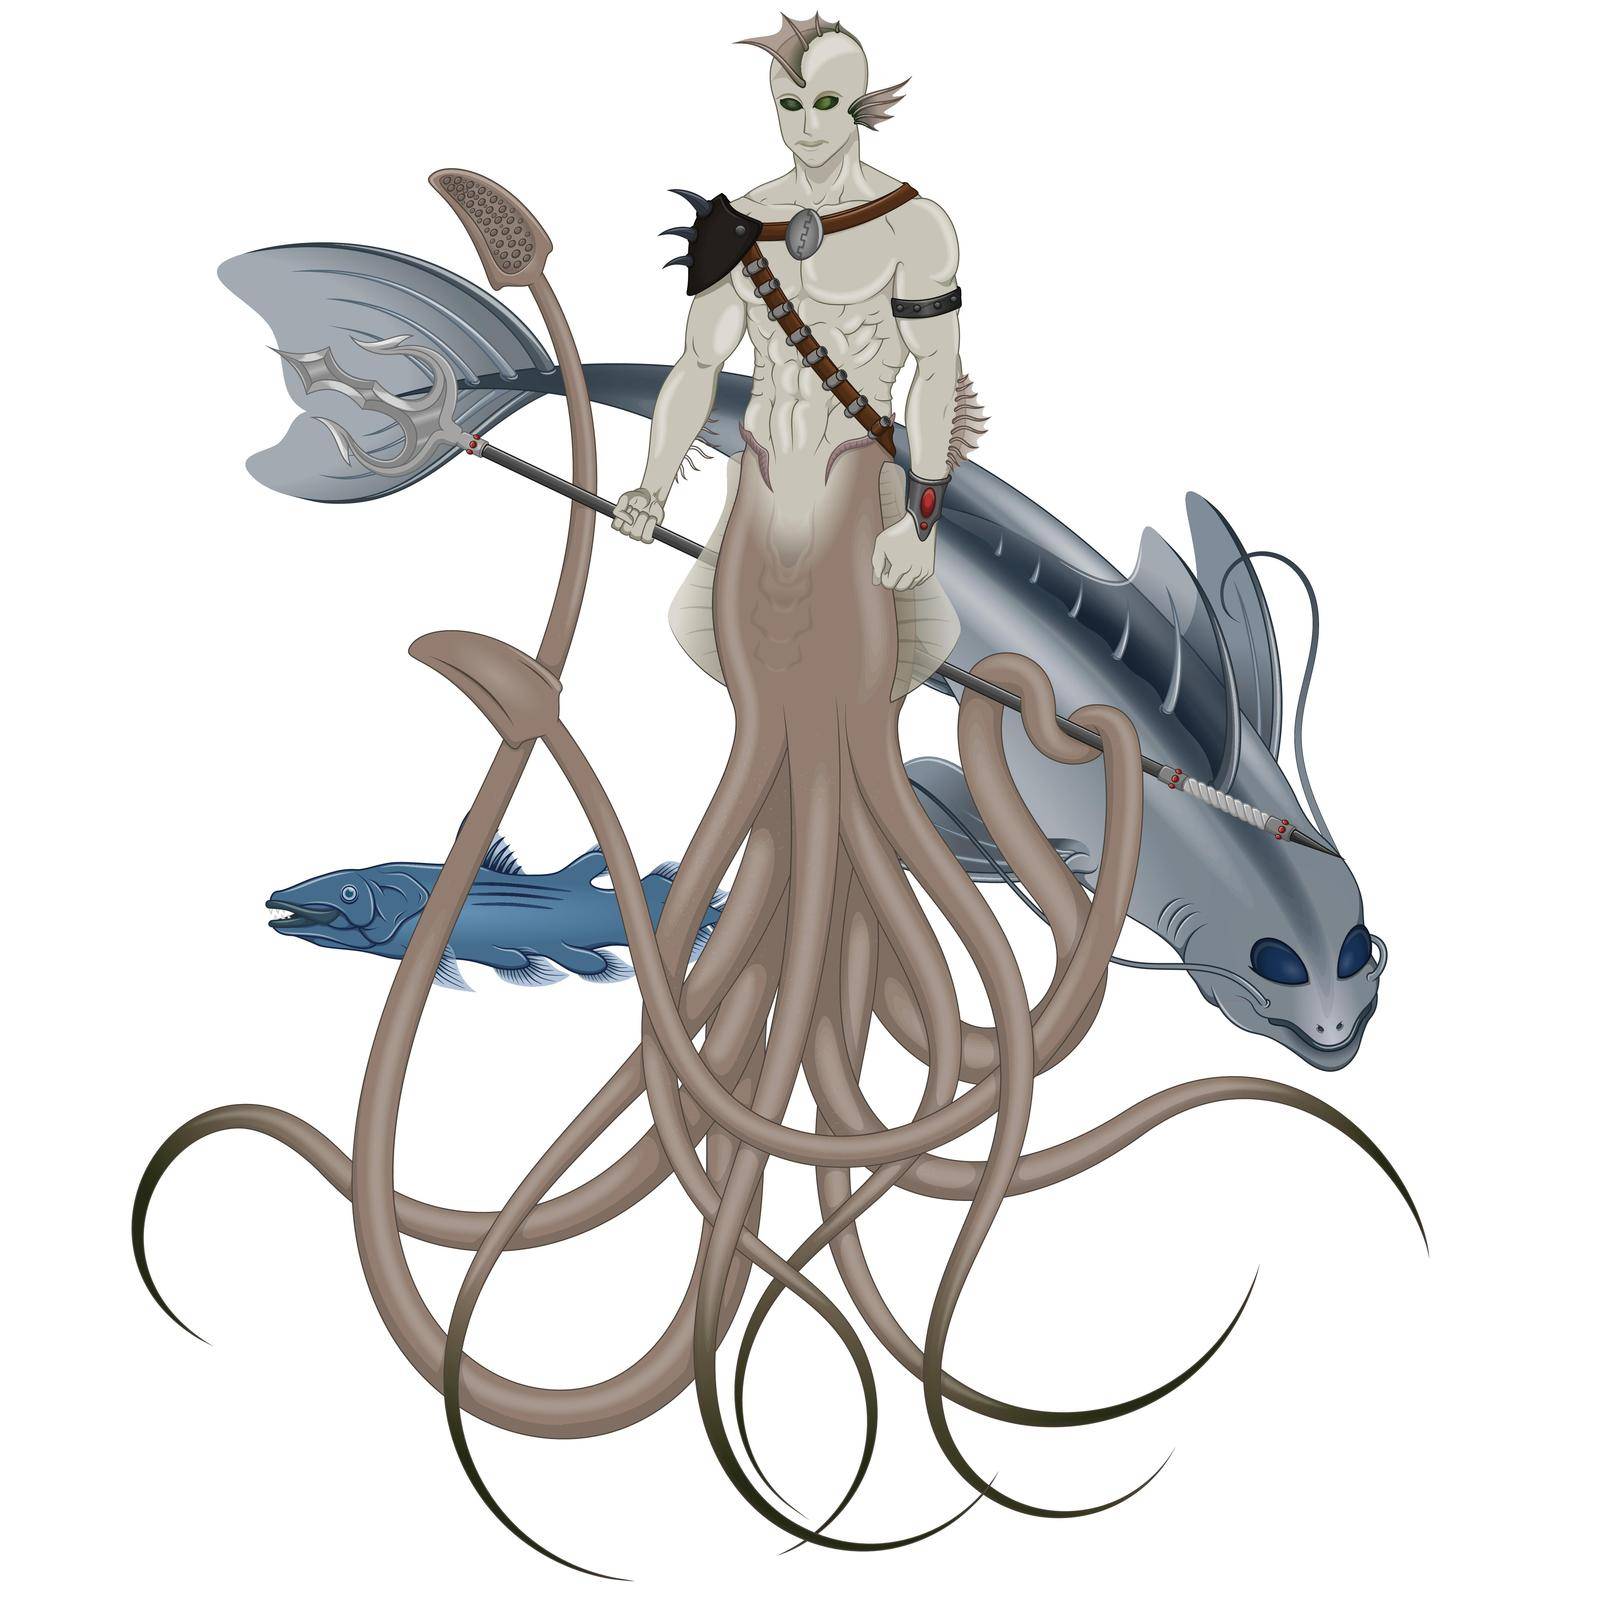 Half man half squid creature vector design, fantasy creature with trident, sea creature with tentacles